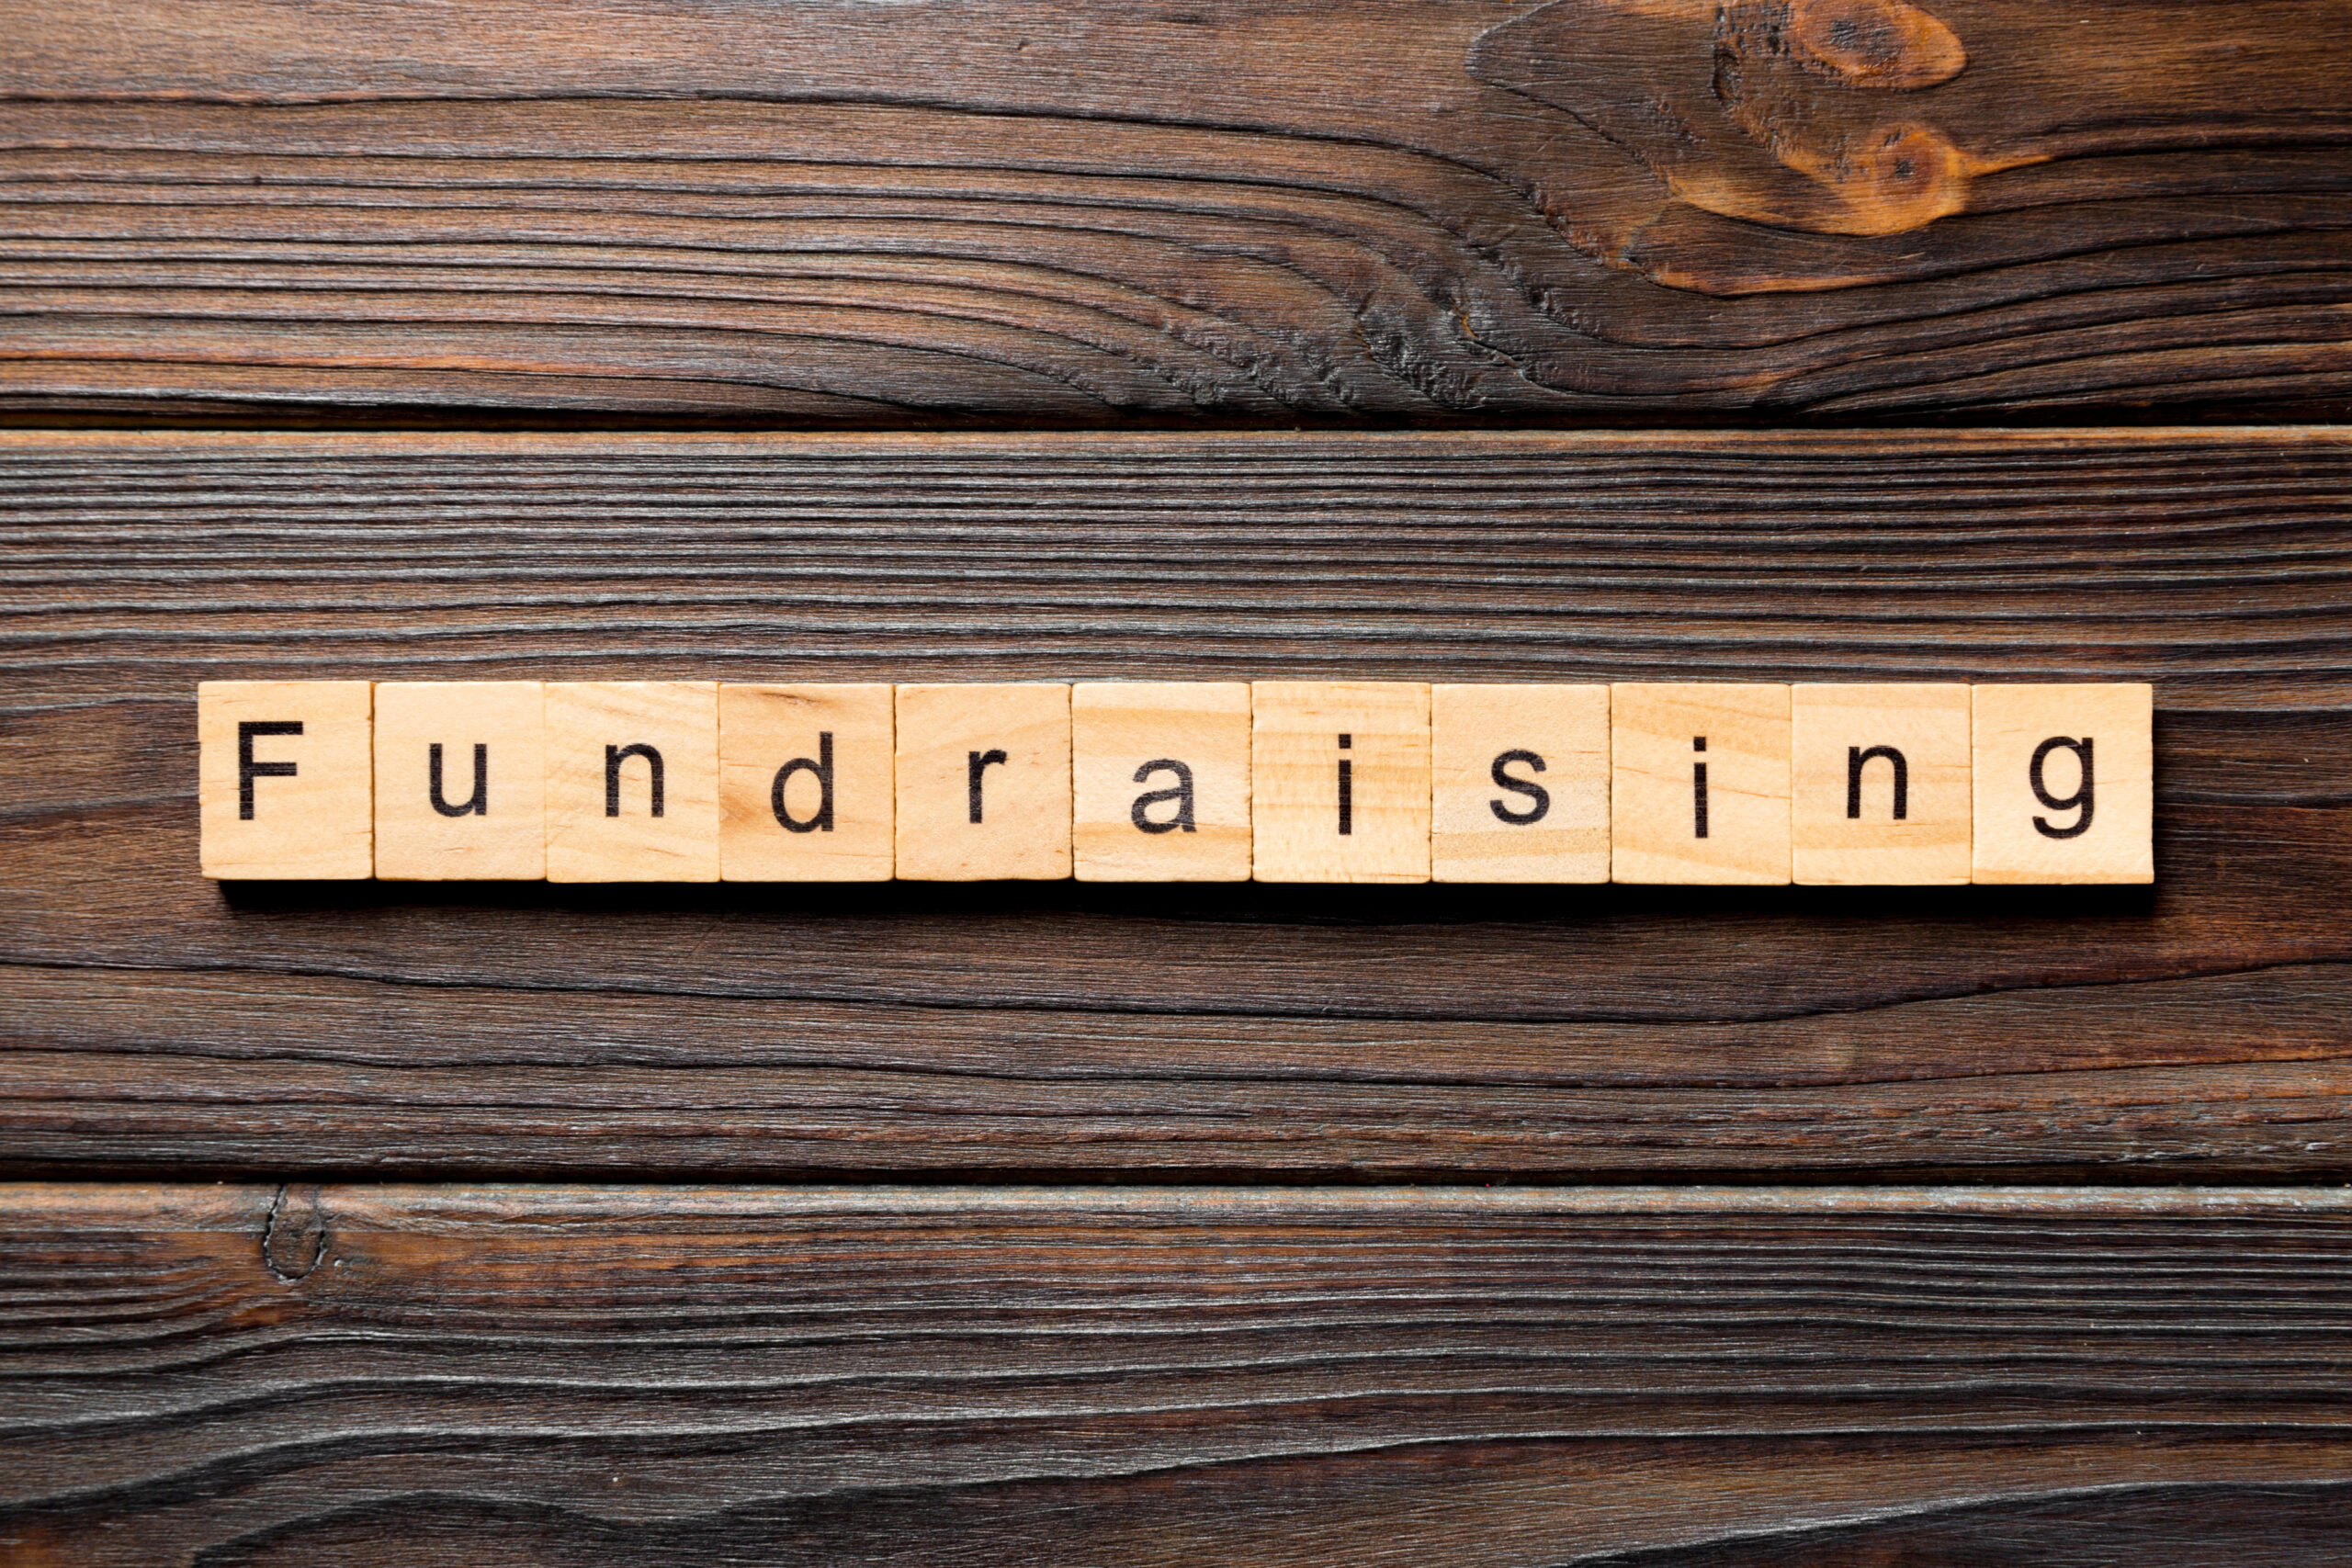 Fundraising image